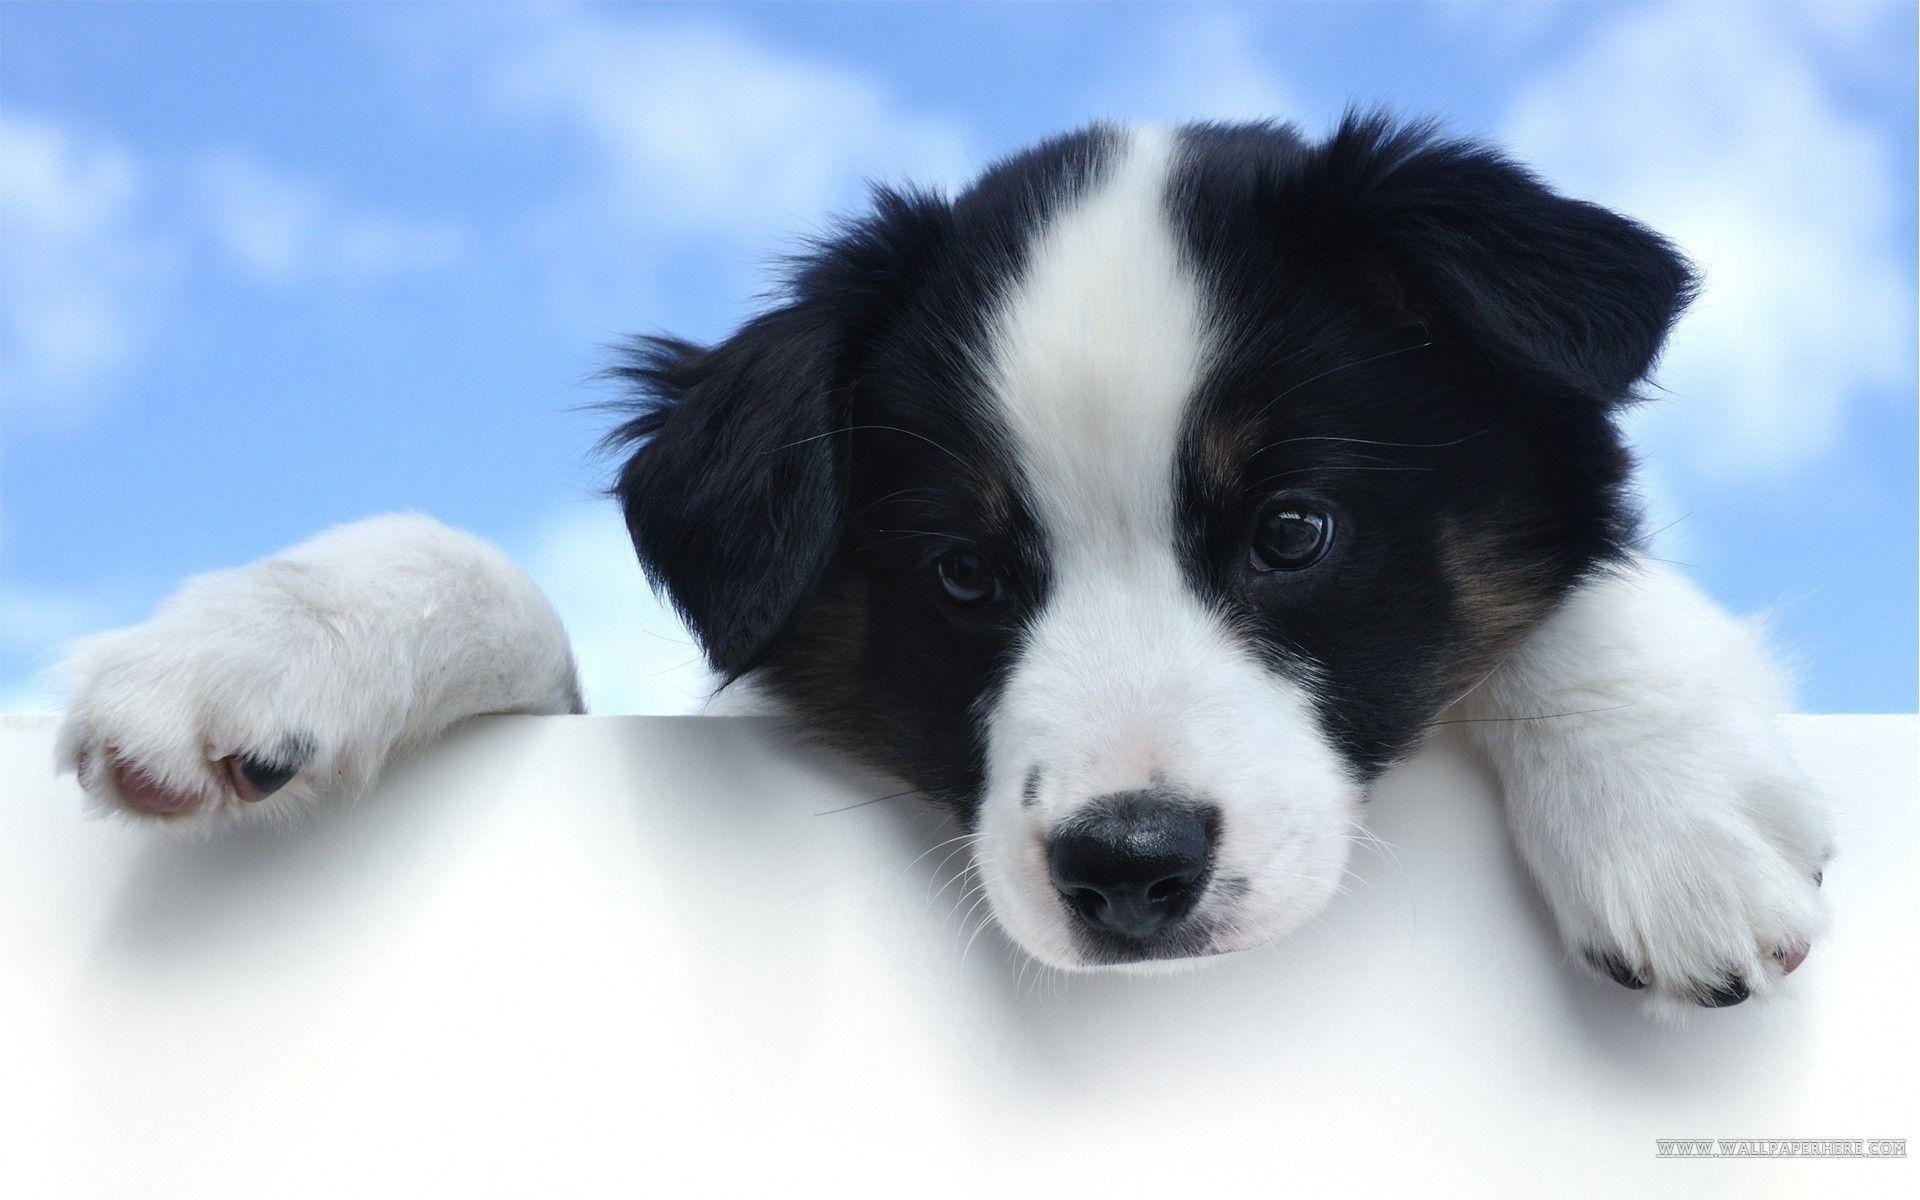 image For > Cute Dog Wallpaper Desktop